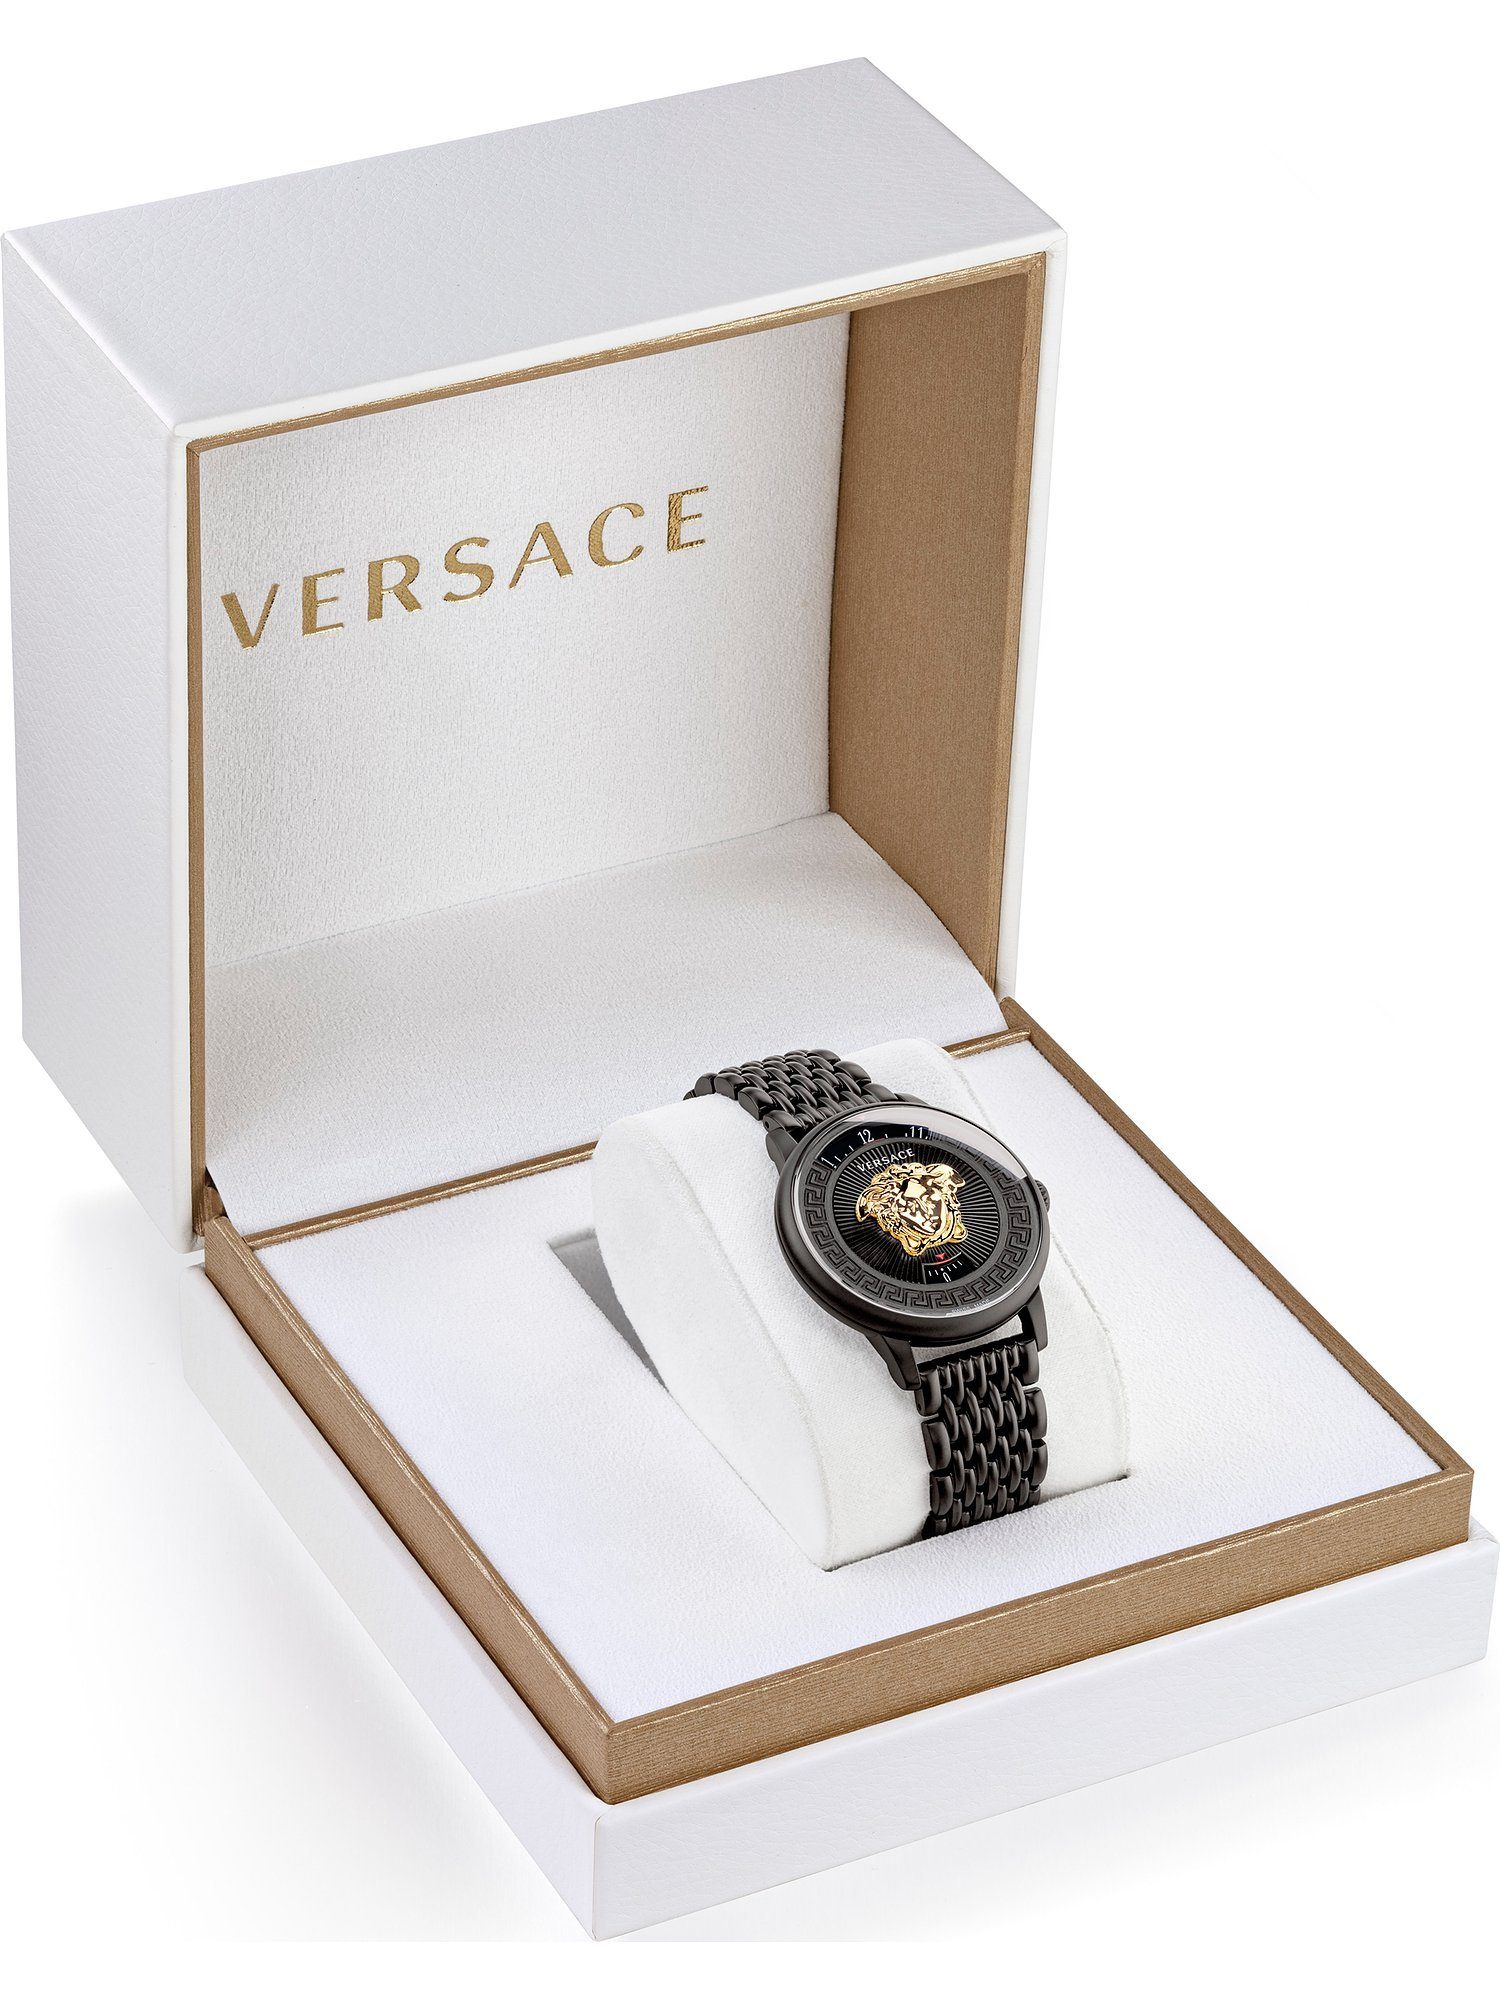 Quarz, Analog Quarzuhr Damen-Uhren schwarz Klassikuhr Versace Versace